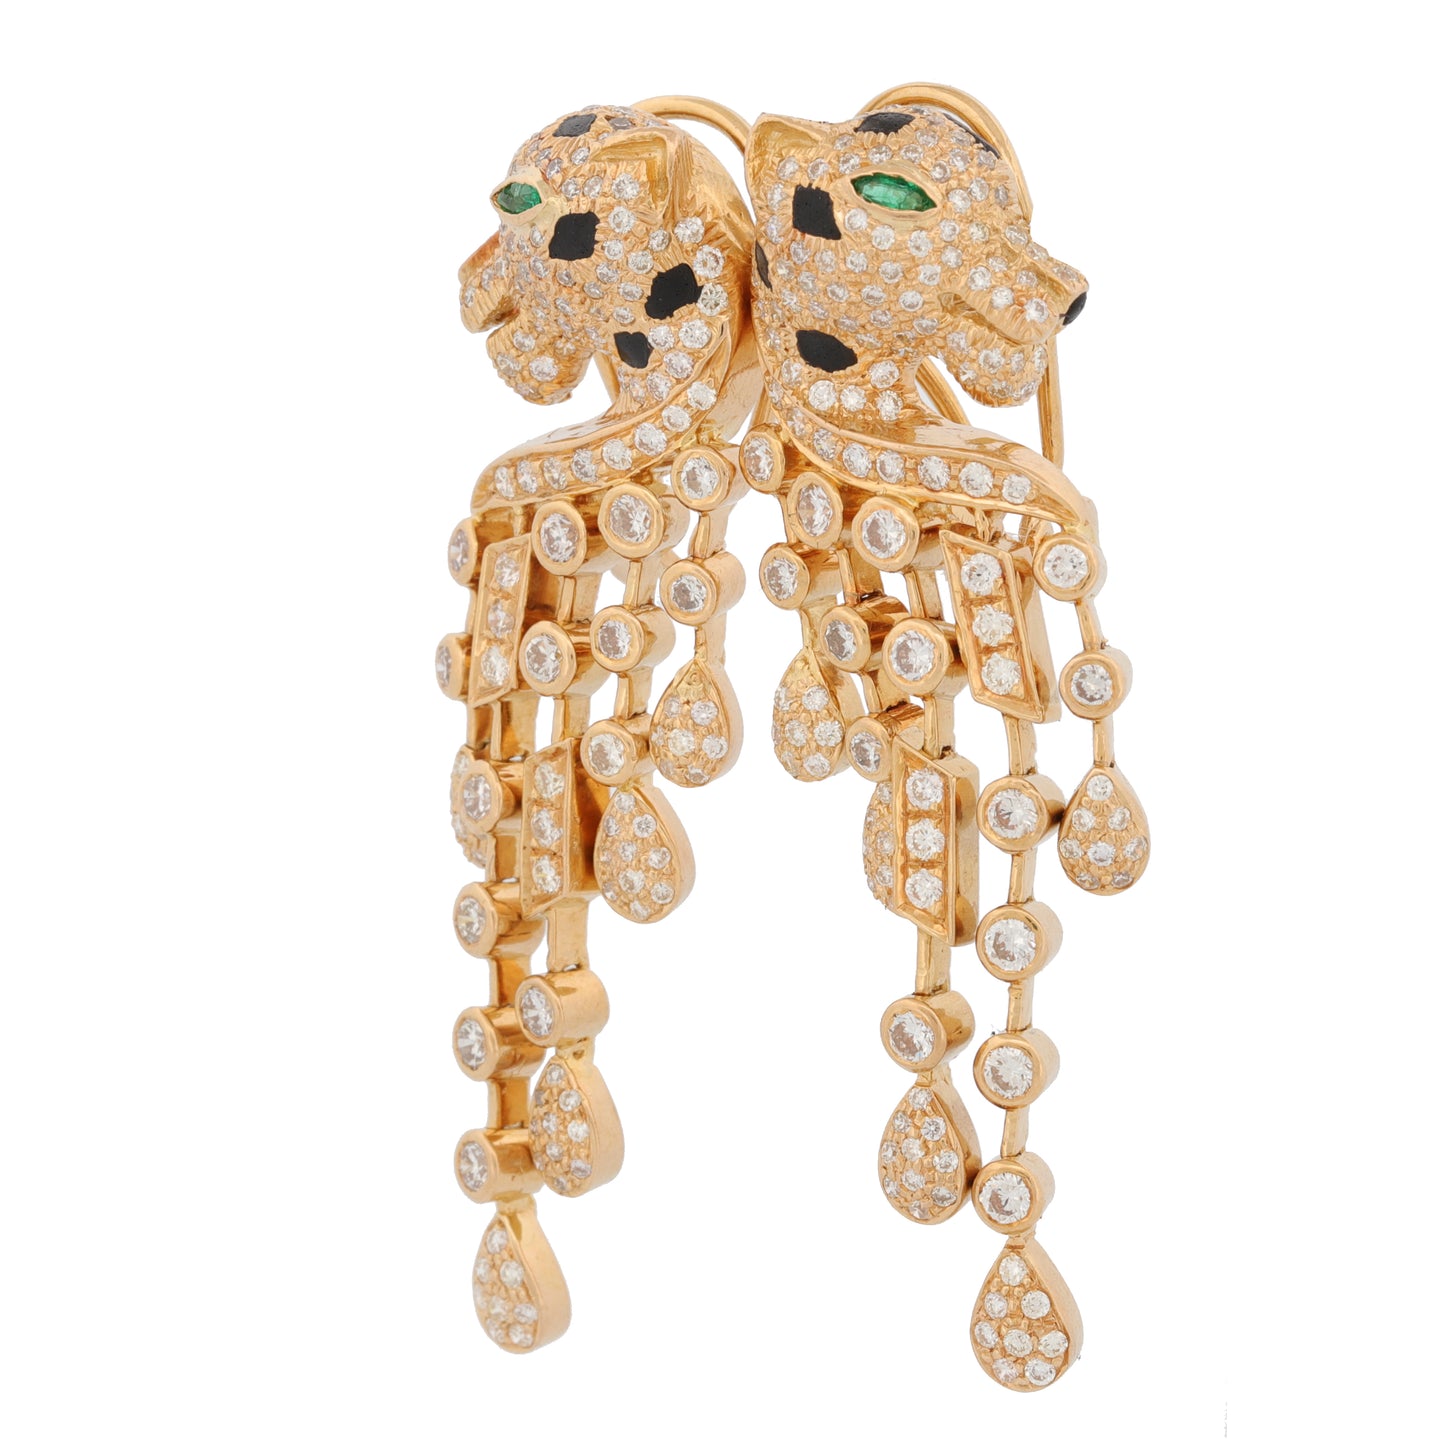 Leopard Pave Diamond Dangle Statement Earrings in 18k Yellow Gold